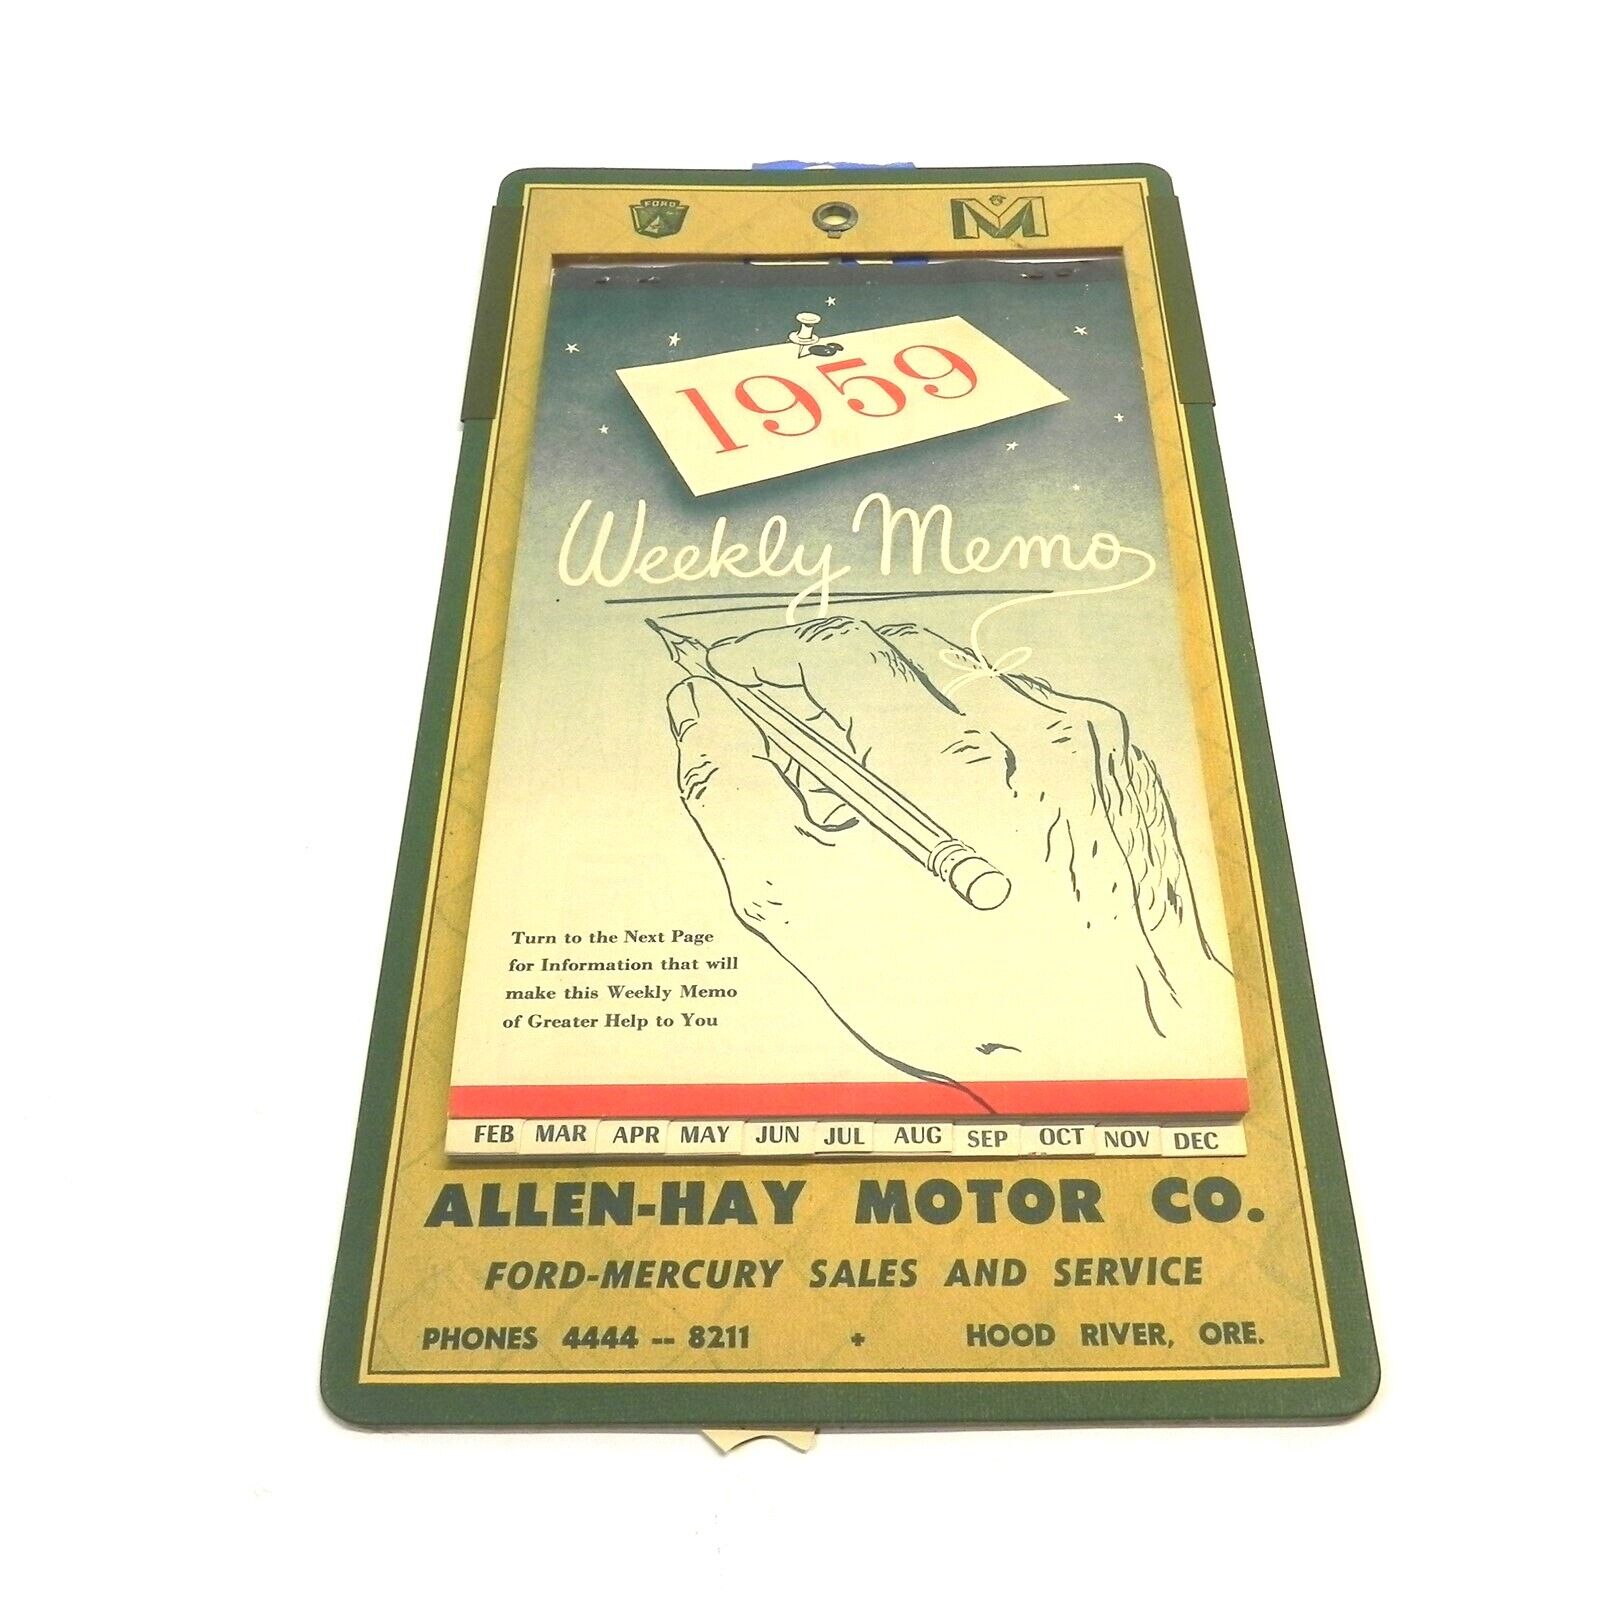 ALLEN-HAY MOTOR CO. HOOD RIVER, OR 1959 PROMO CALLENDAR NEW UNUSED VINTAGE SIGN